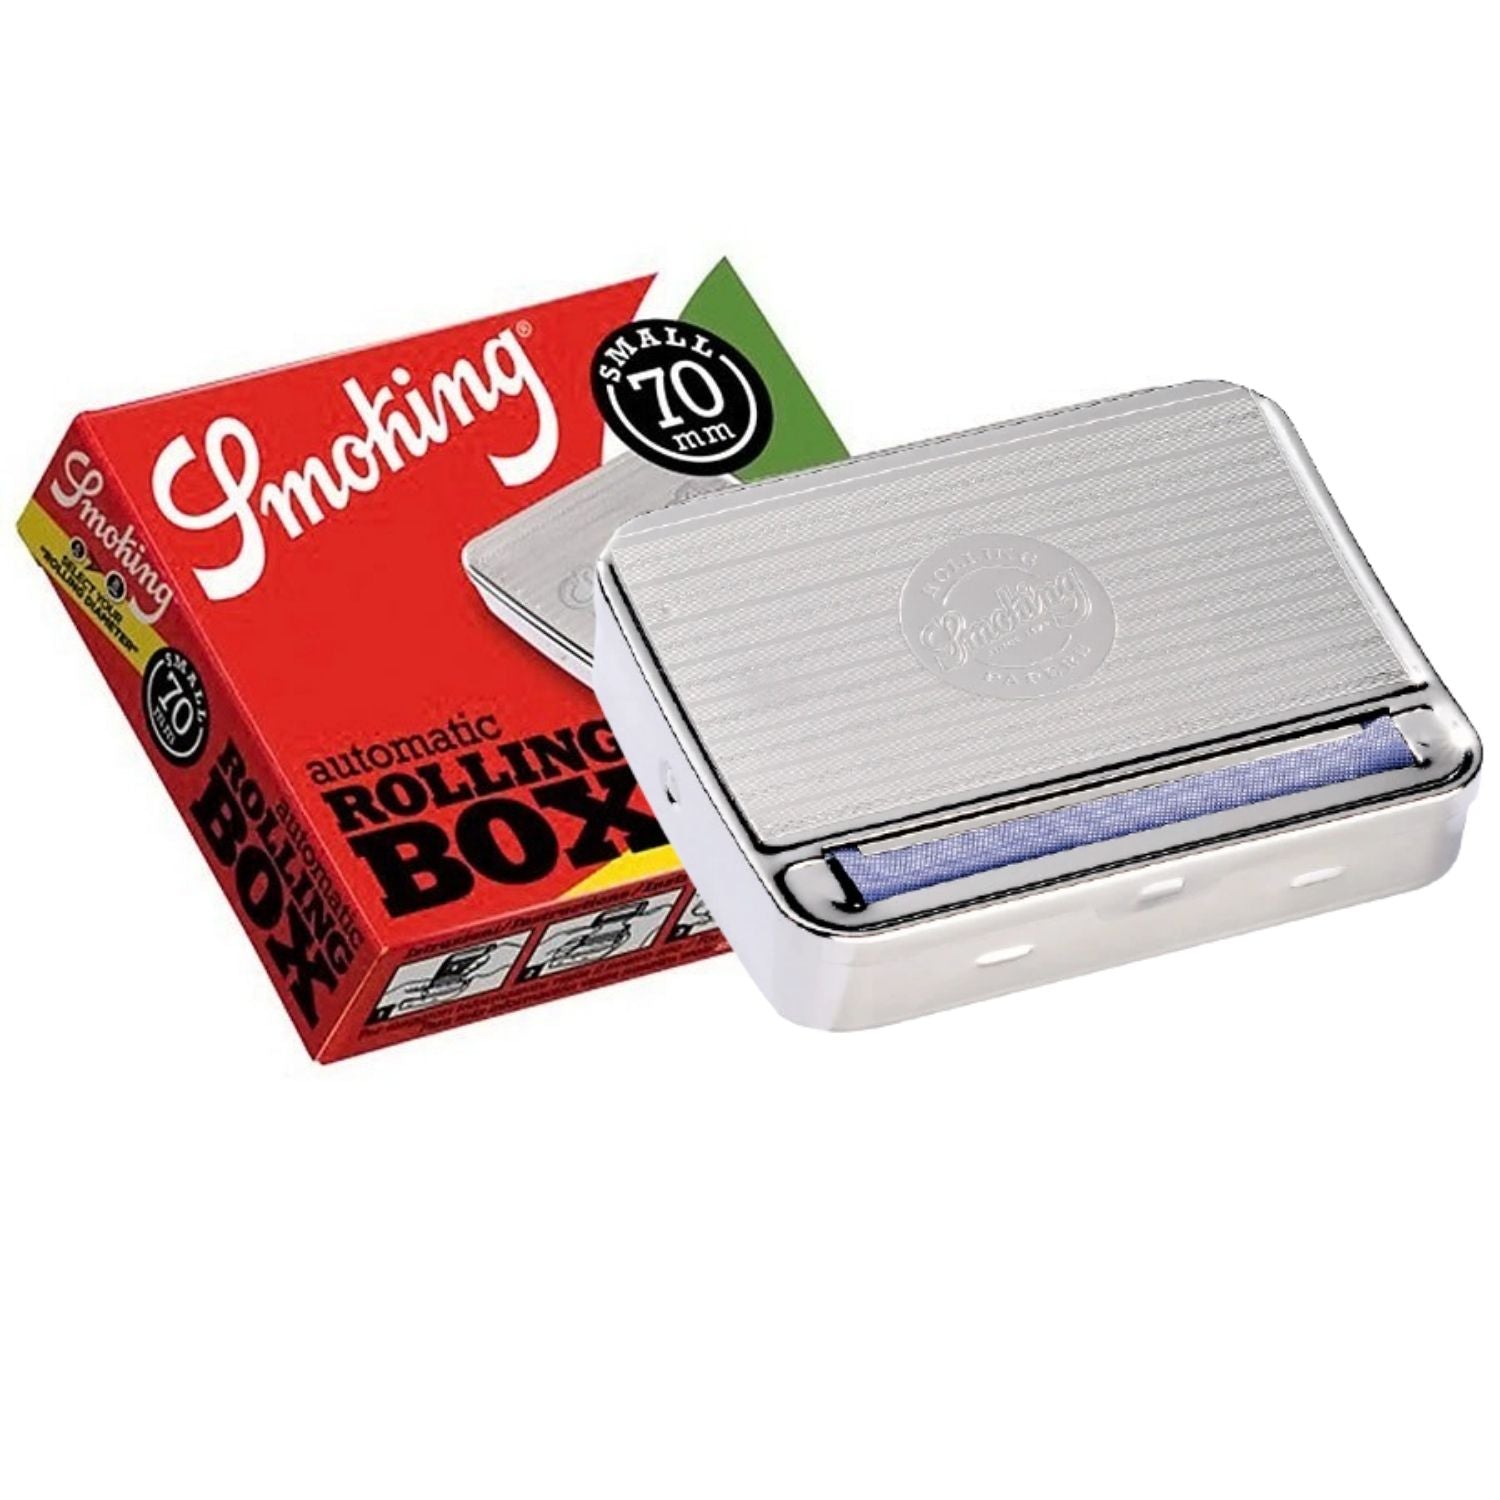 Buy SMOKING Rolling Box (Automatic) - 70mm